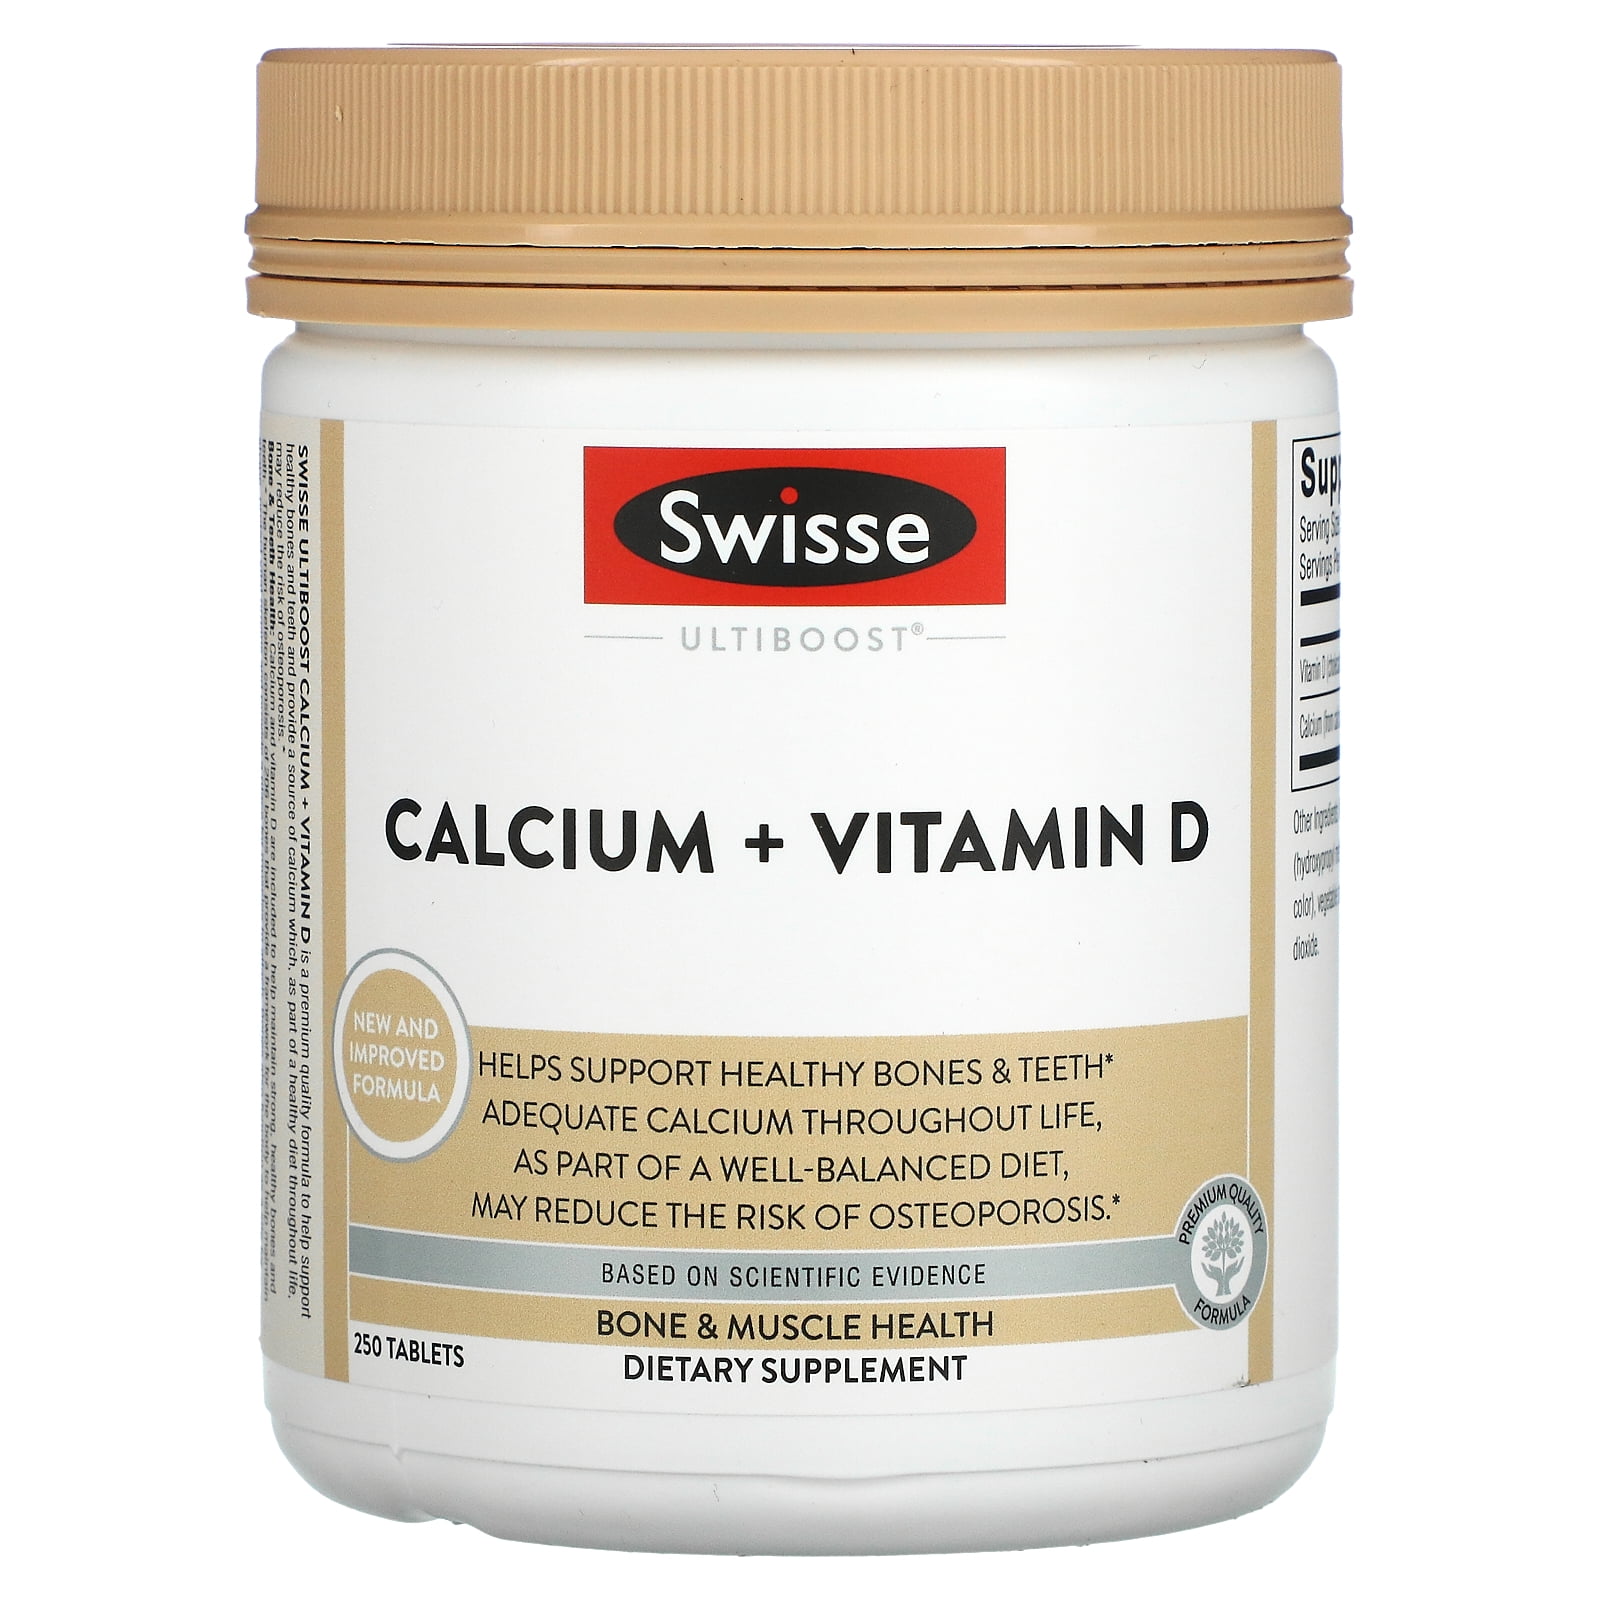 Haiku Aarzelen Fauteuil Swisse Ultiboost, Calcium + Vitamin D, 250 Tablets - Walmart.com